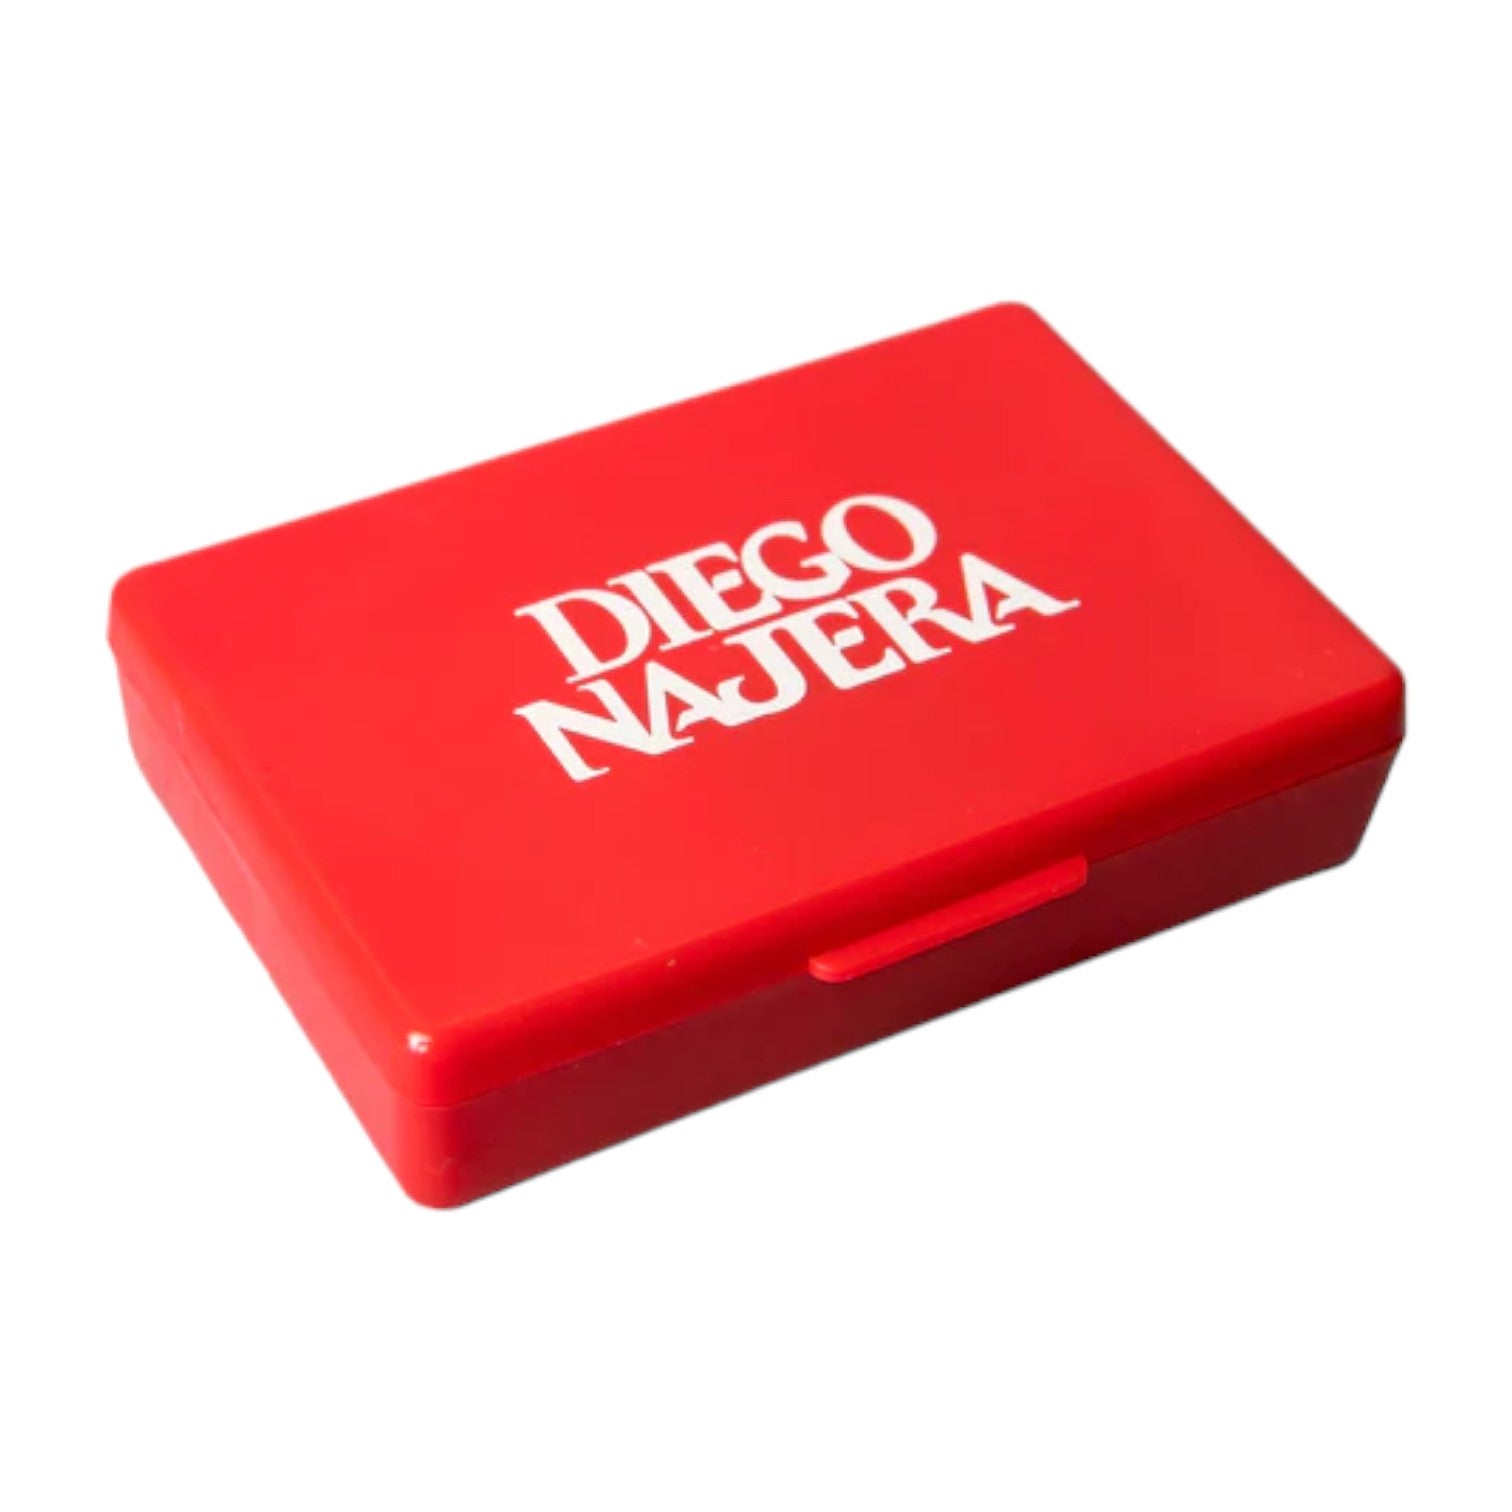 Nothing Special Diego Najera Bearings